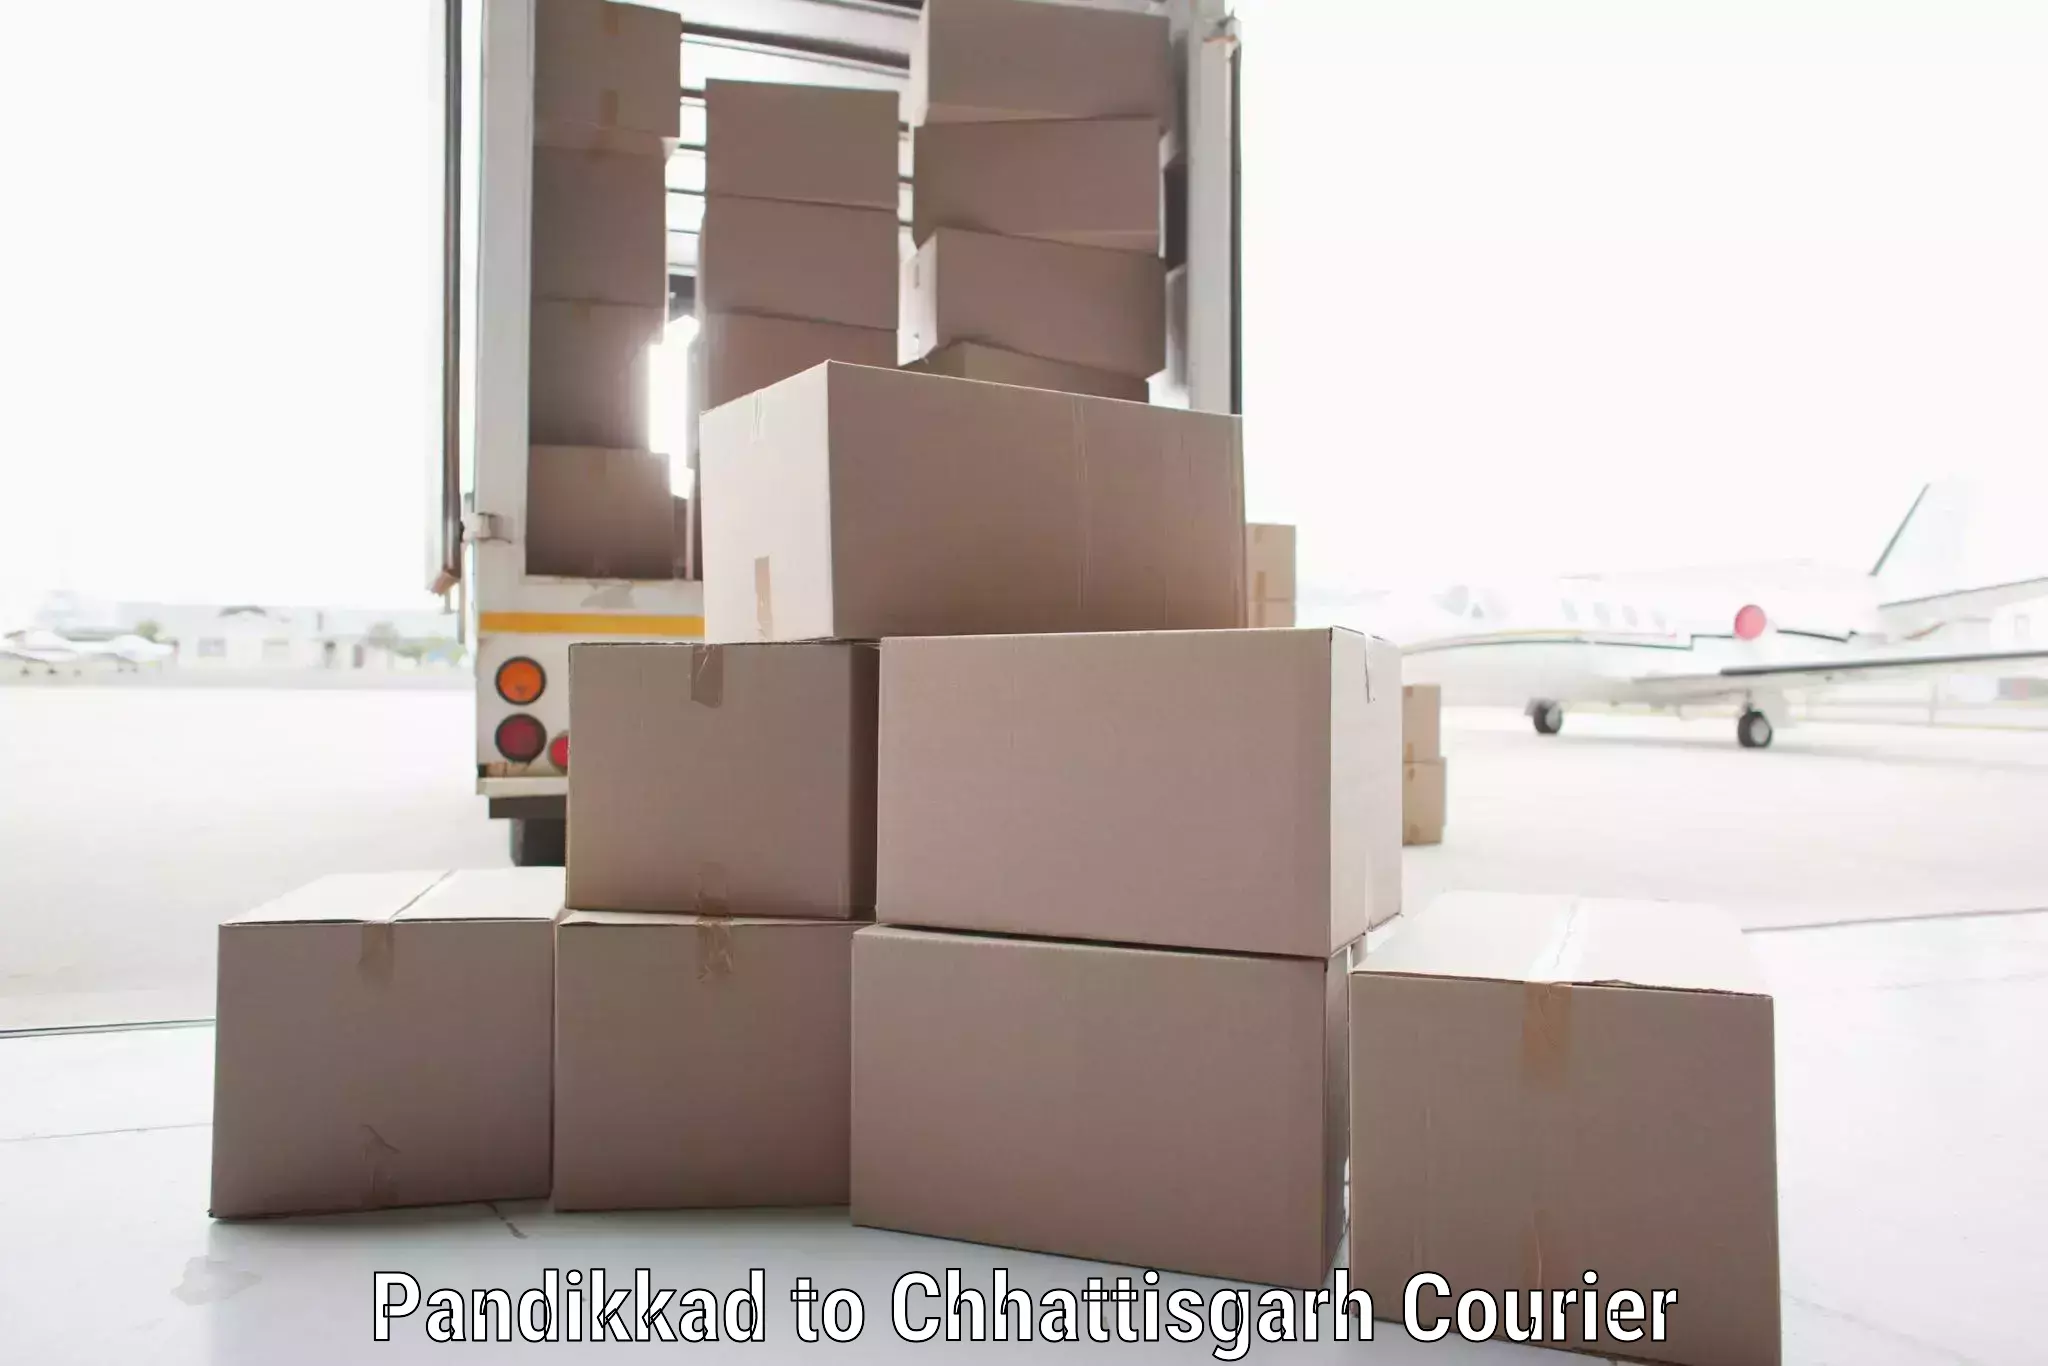 High-priority parcel service Pandikkad to Raipur